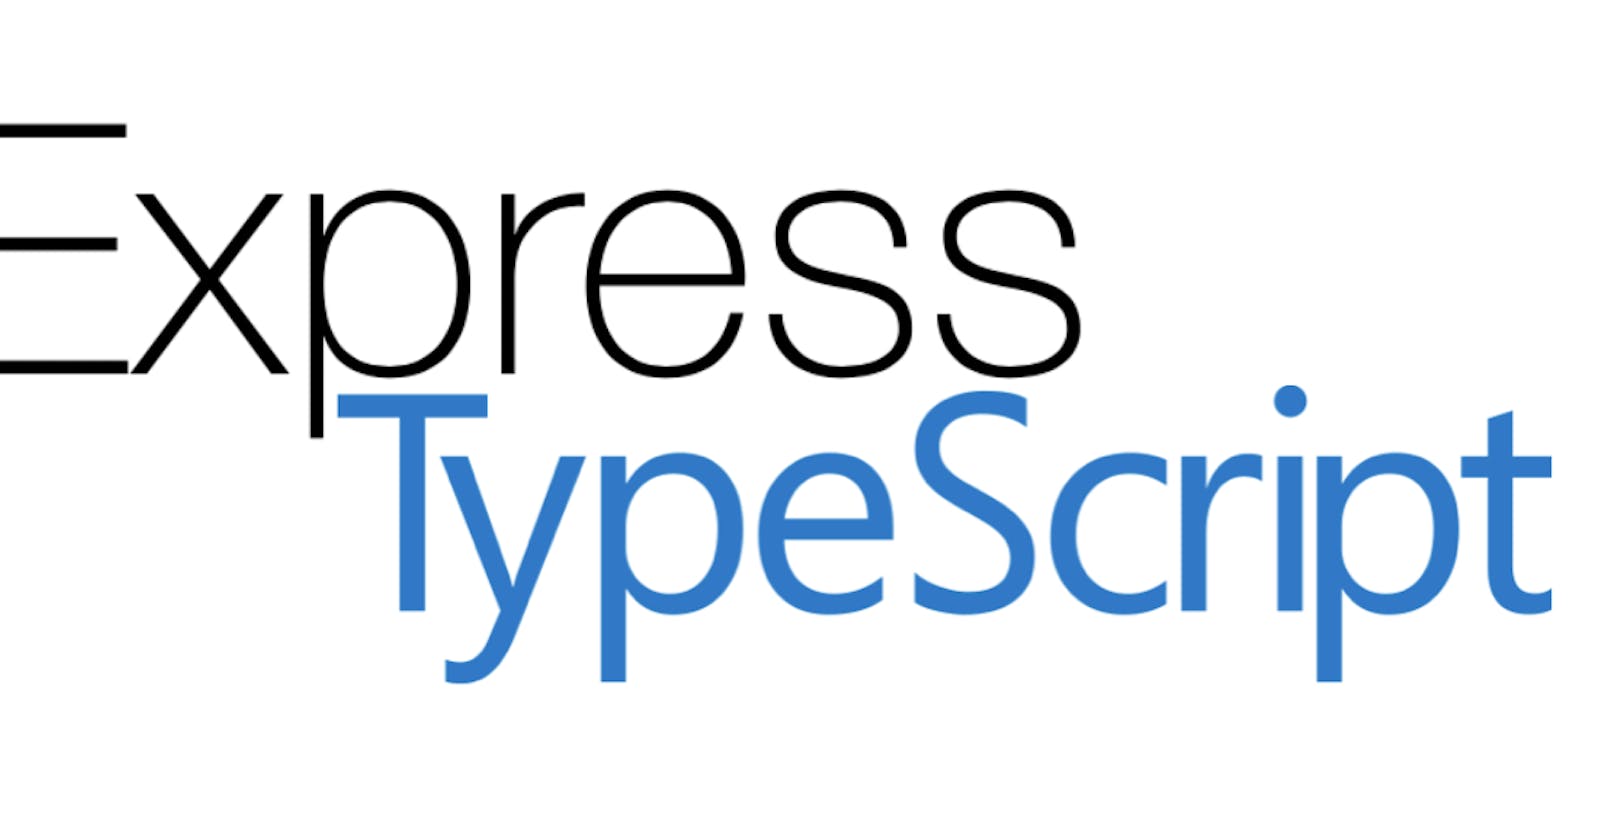 How To create an API using Node.js, Express, and Typescript